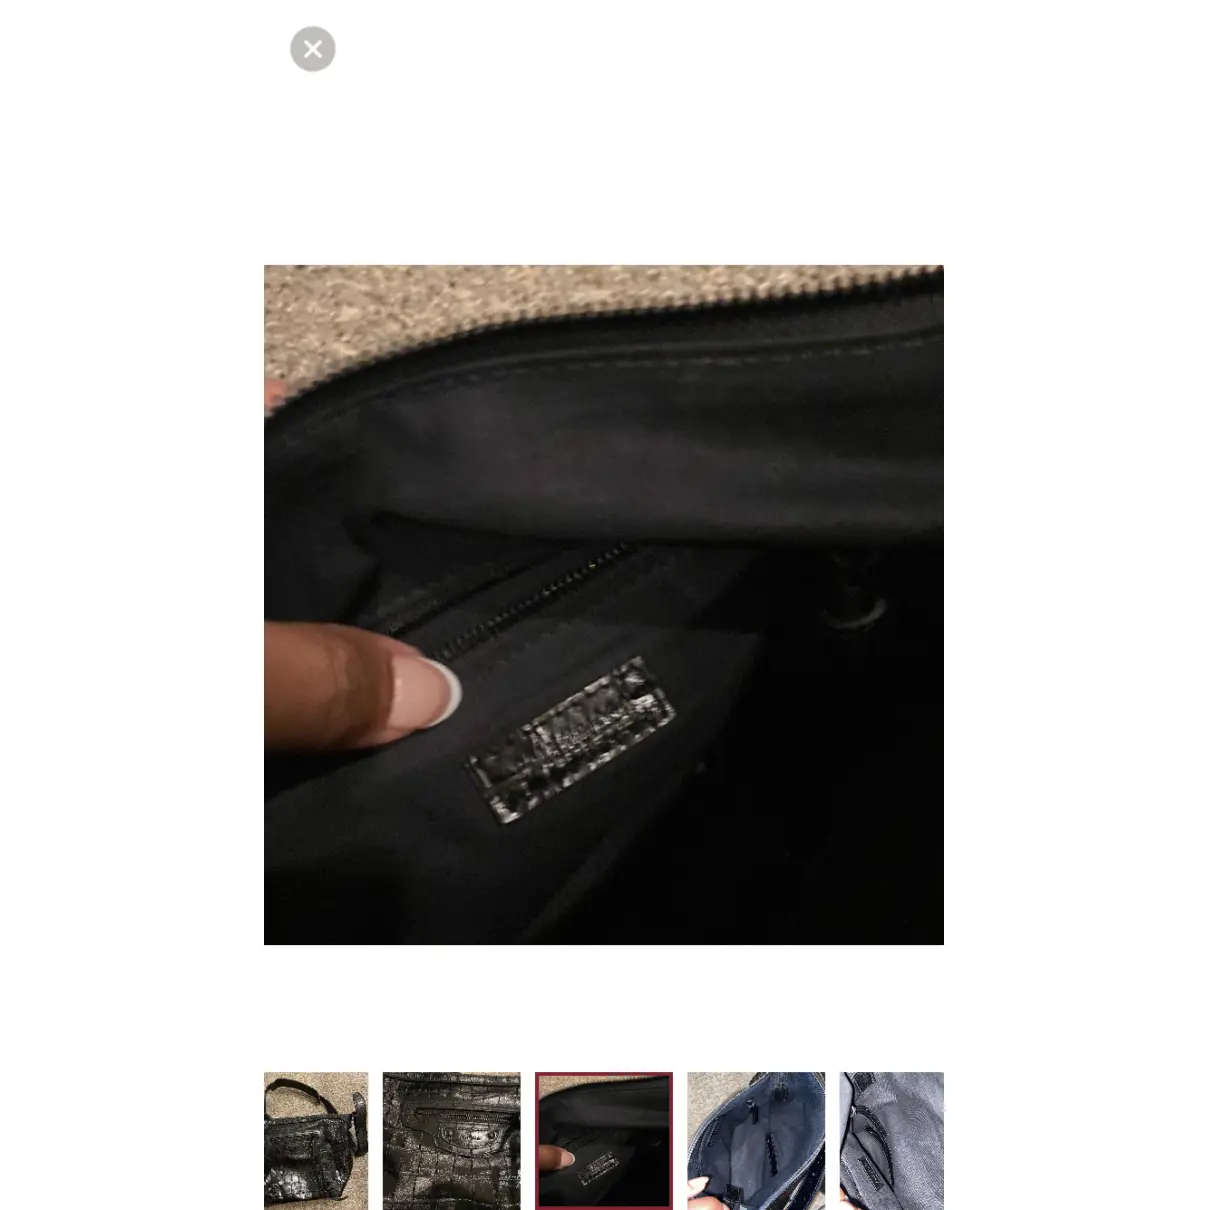 Neo Classic leather crossbody bag Balenciaga